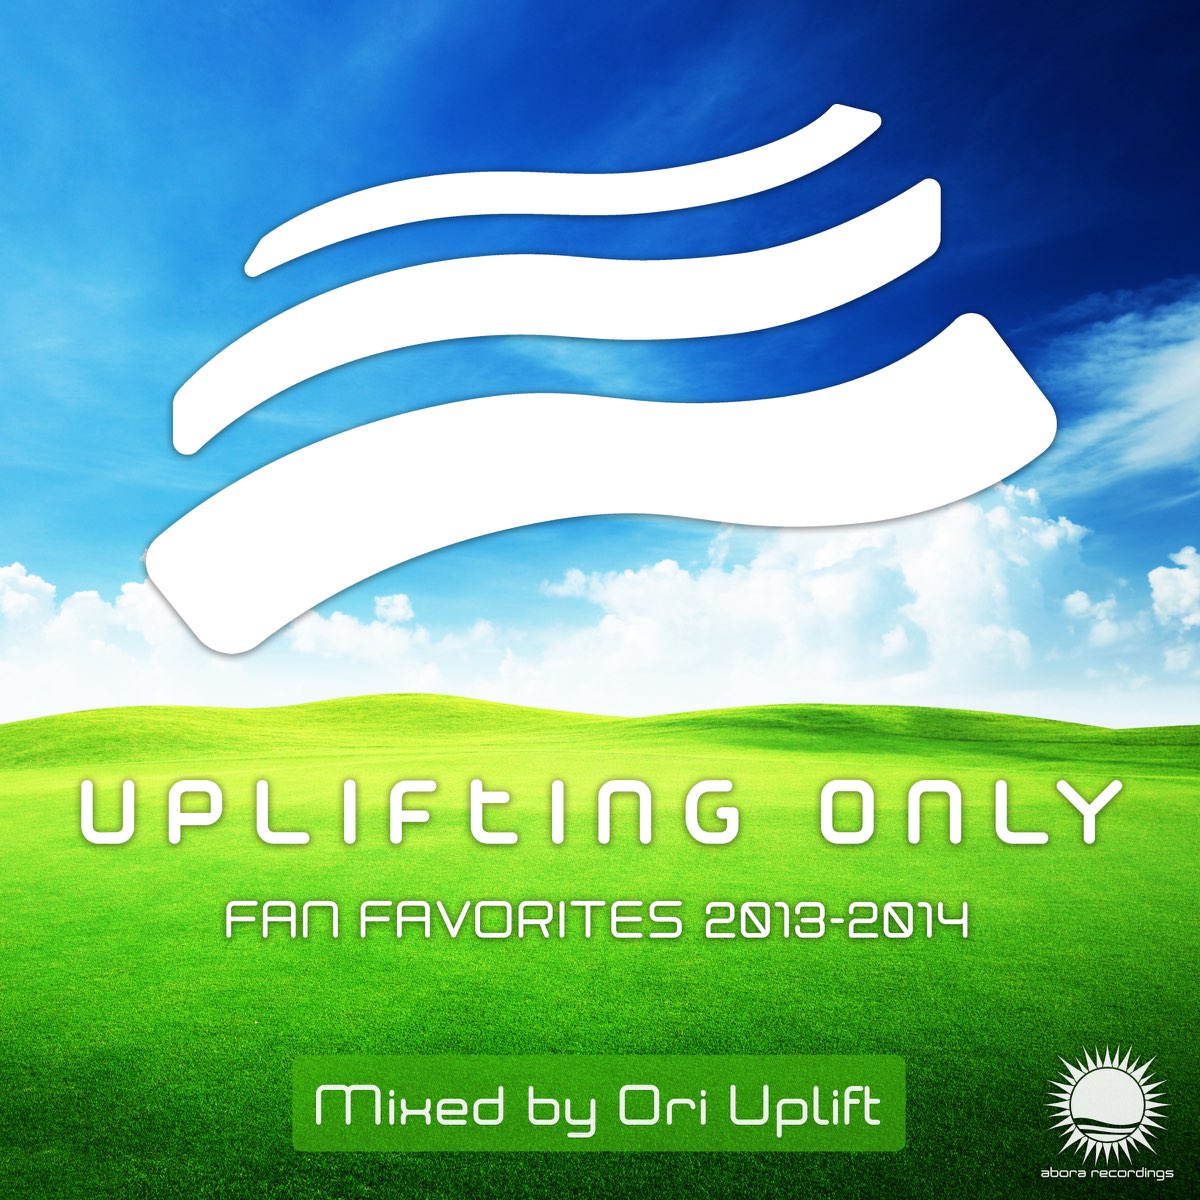 Fan favorite. Uplifting only. Ori uplift - Uplifting only 049 (2014-01-15). Uplifting only Fan Favorit. Ori uplift - Uplifting only 049.